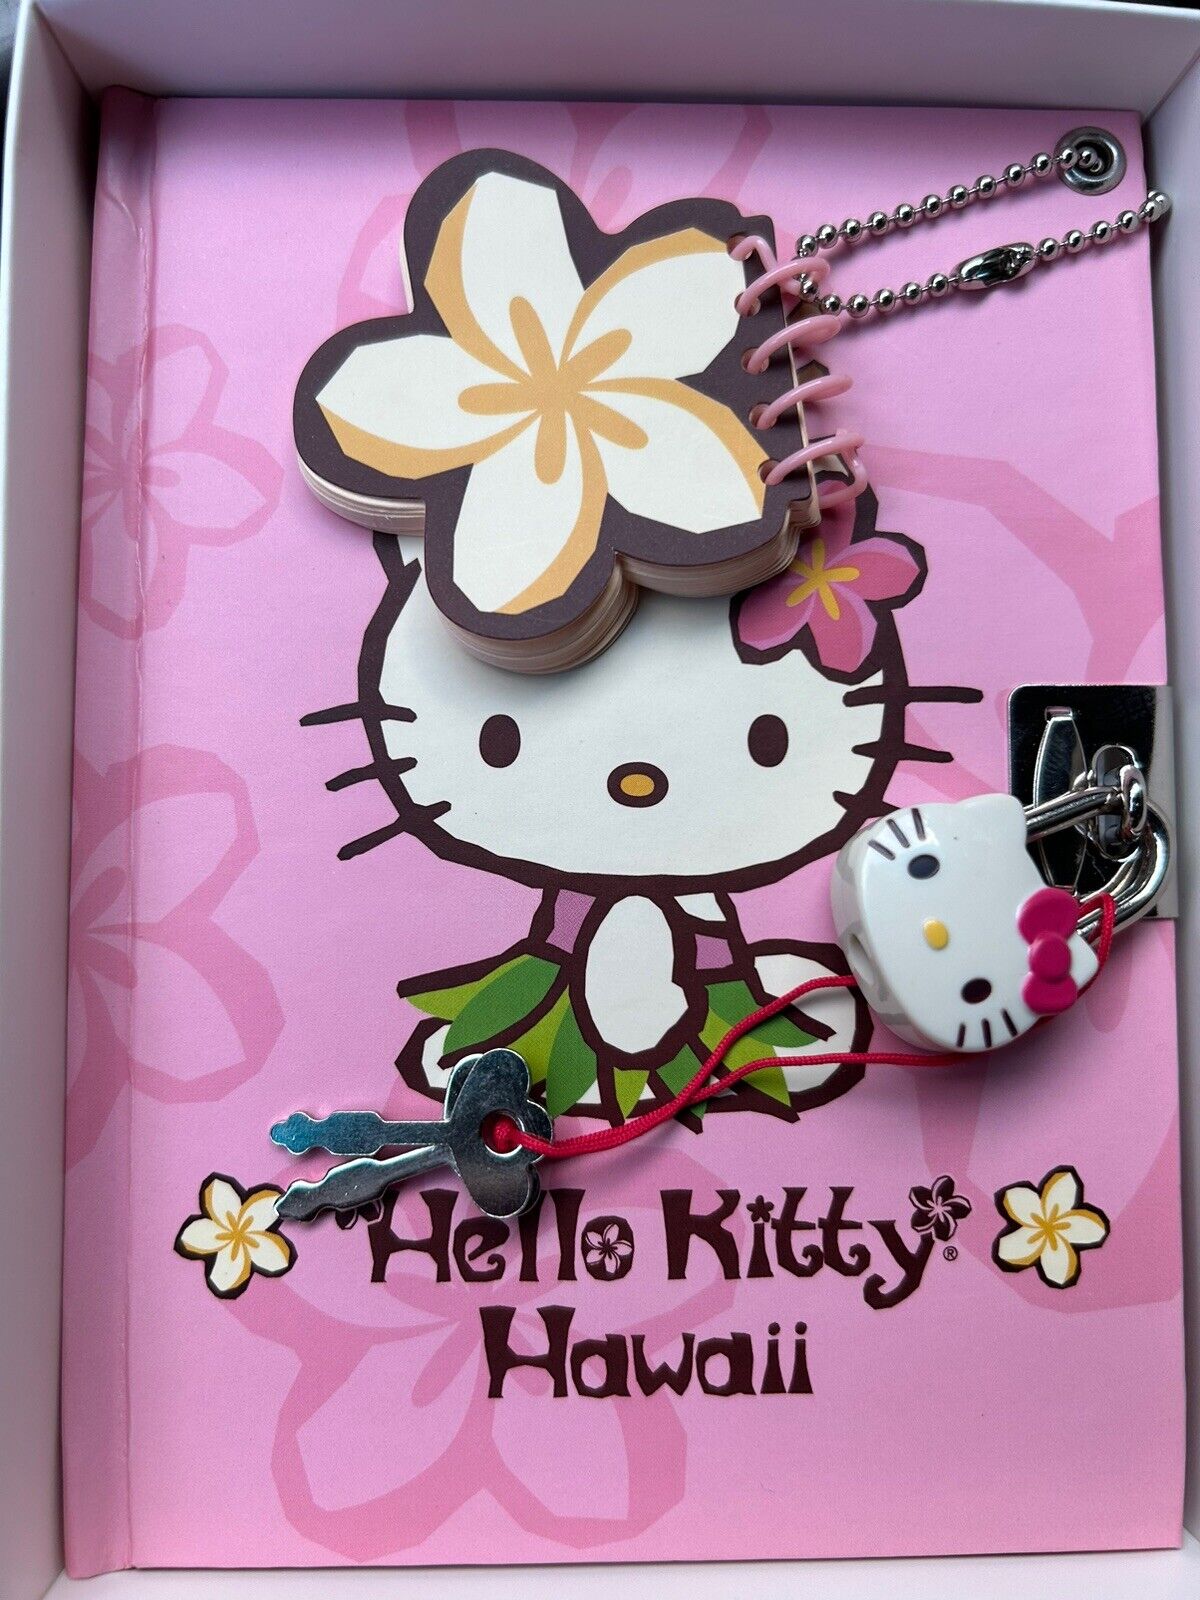 Collectible Hawaii Hello Kitty Diary Journal with Hello Kitty Head Lock & Keys.